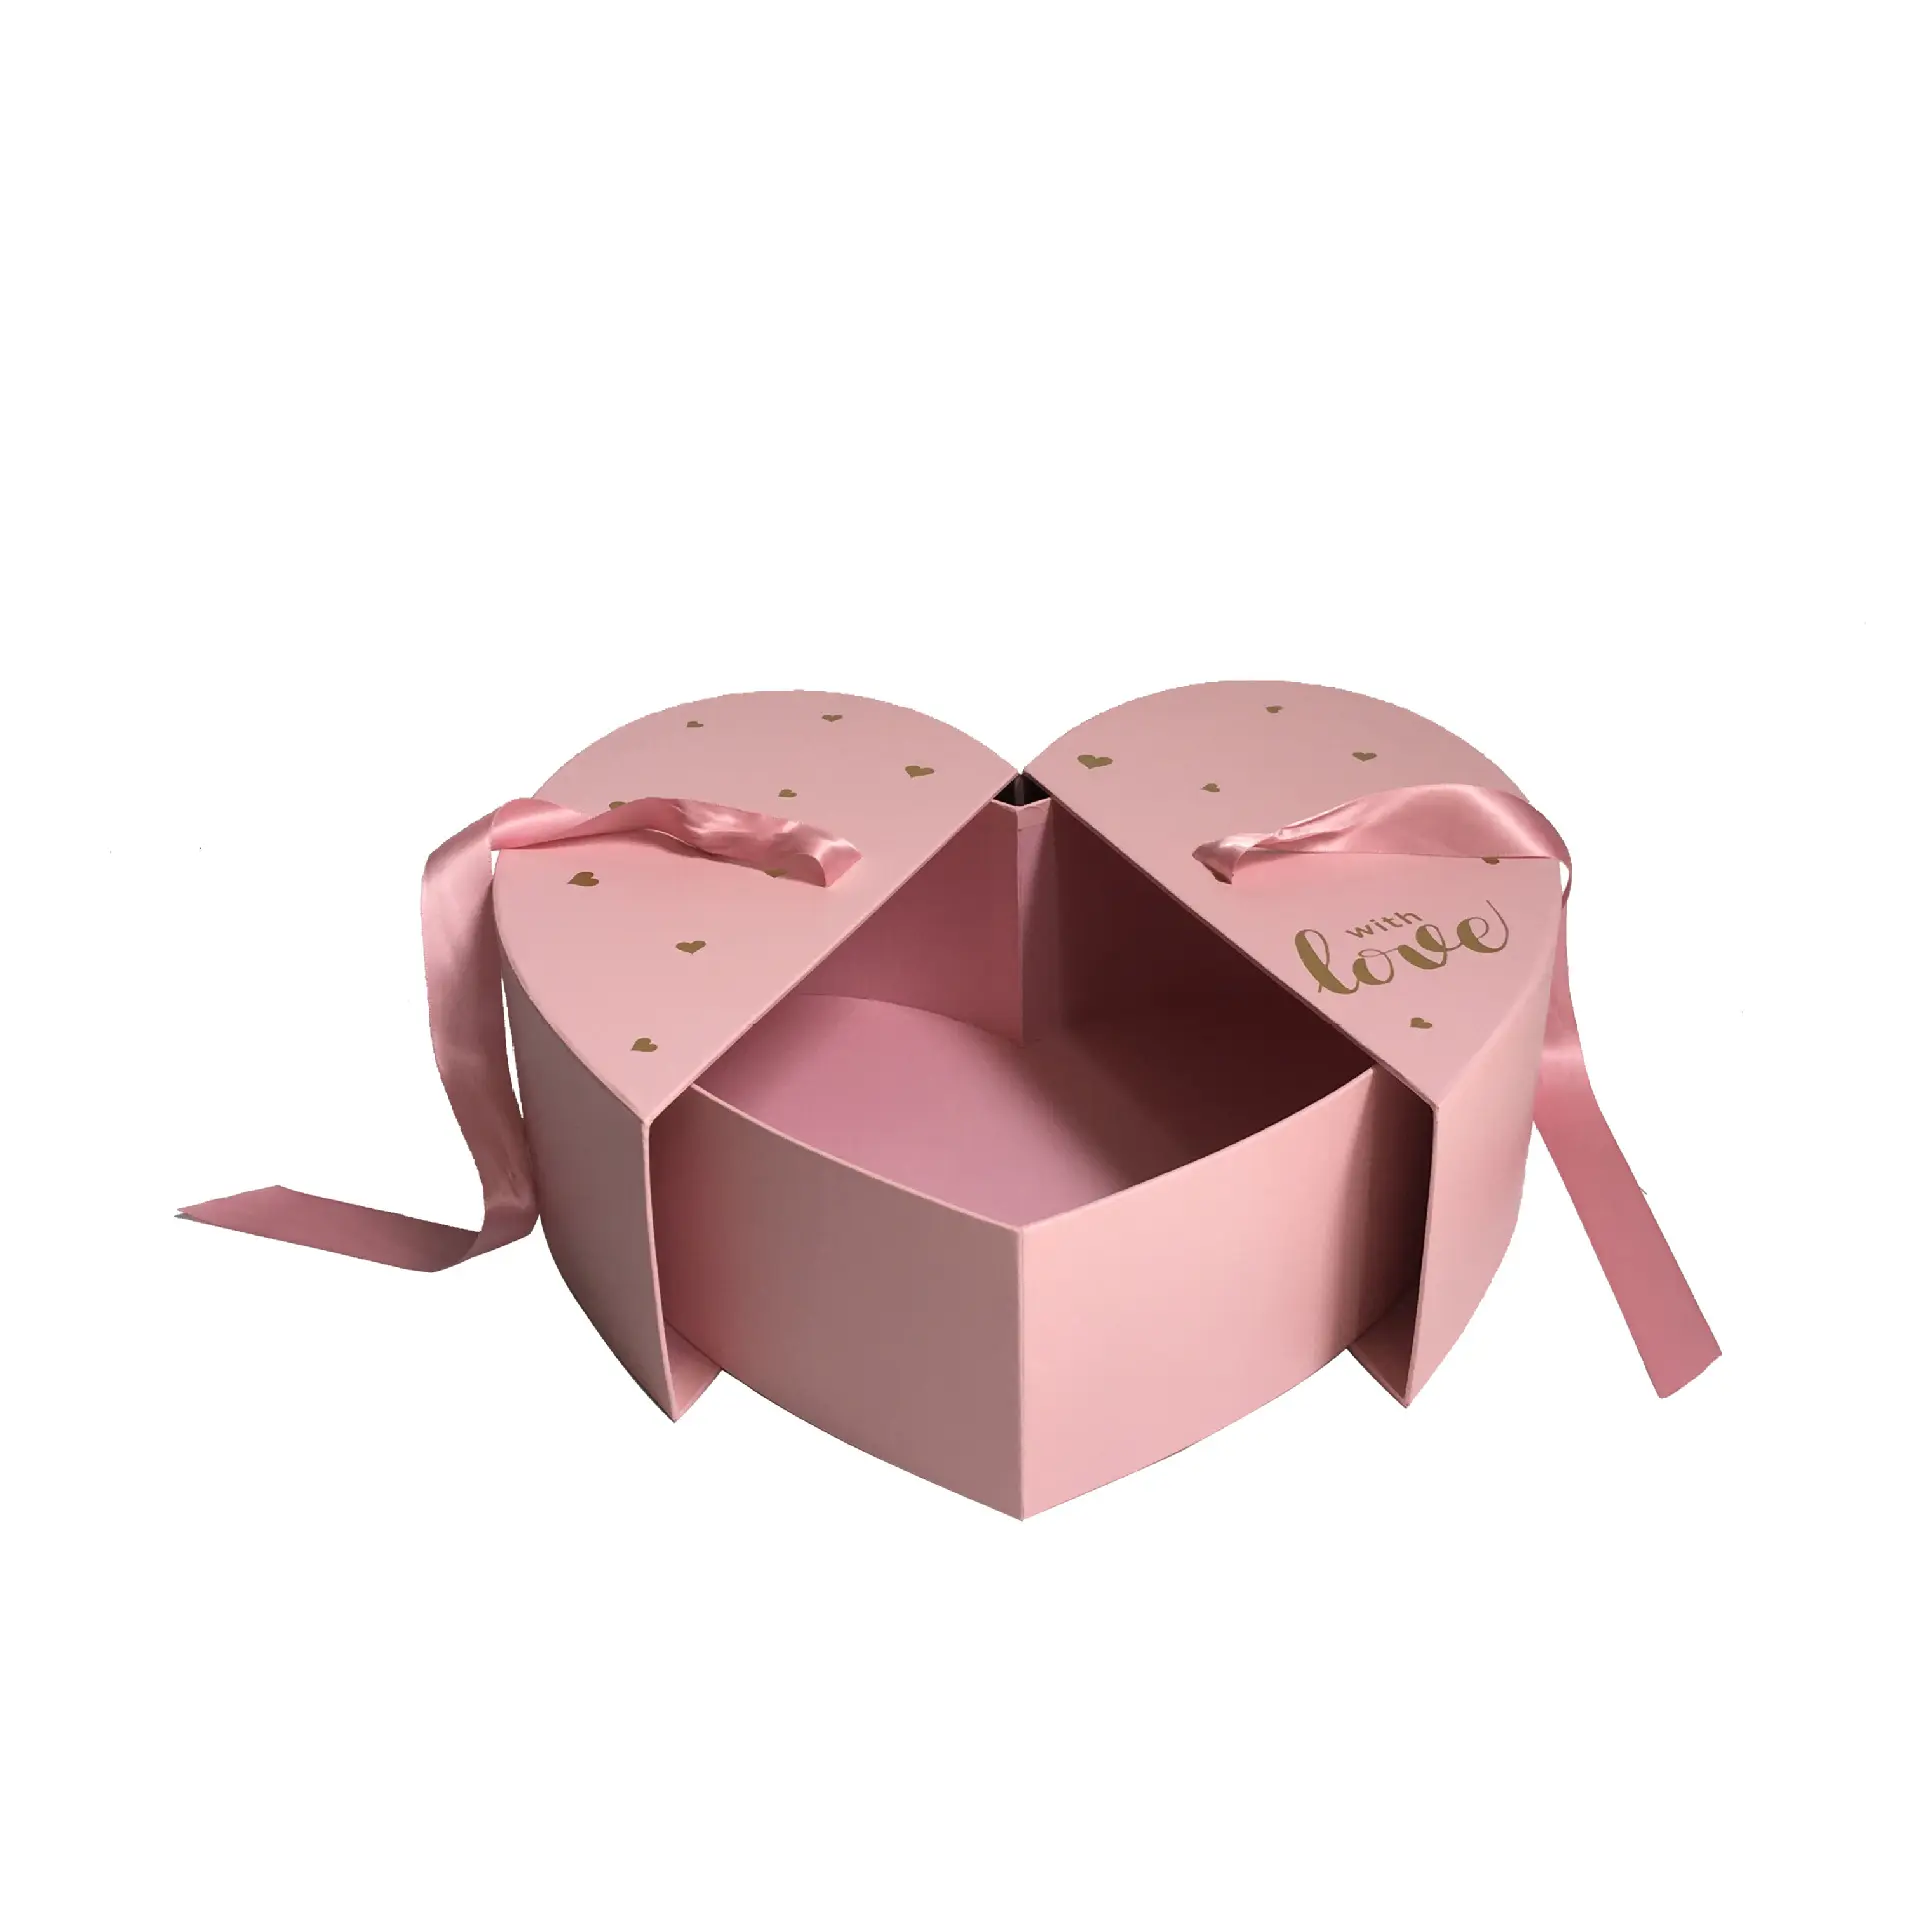 Caja de regalo de papel marrón con roseta magnética personalizada, cartón gris, laminado mate UV, joyería de boda, tubo de embalaje para reloj